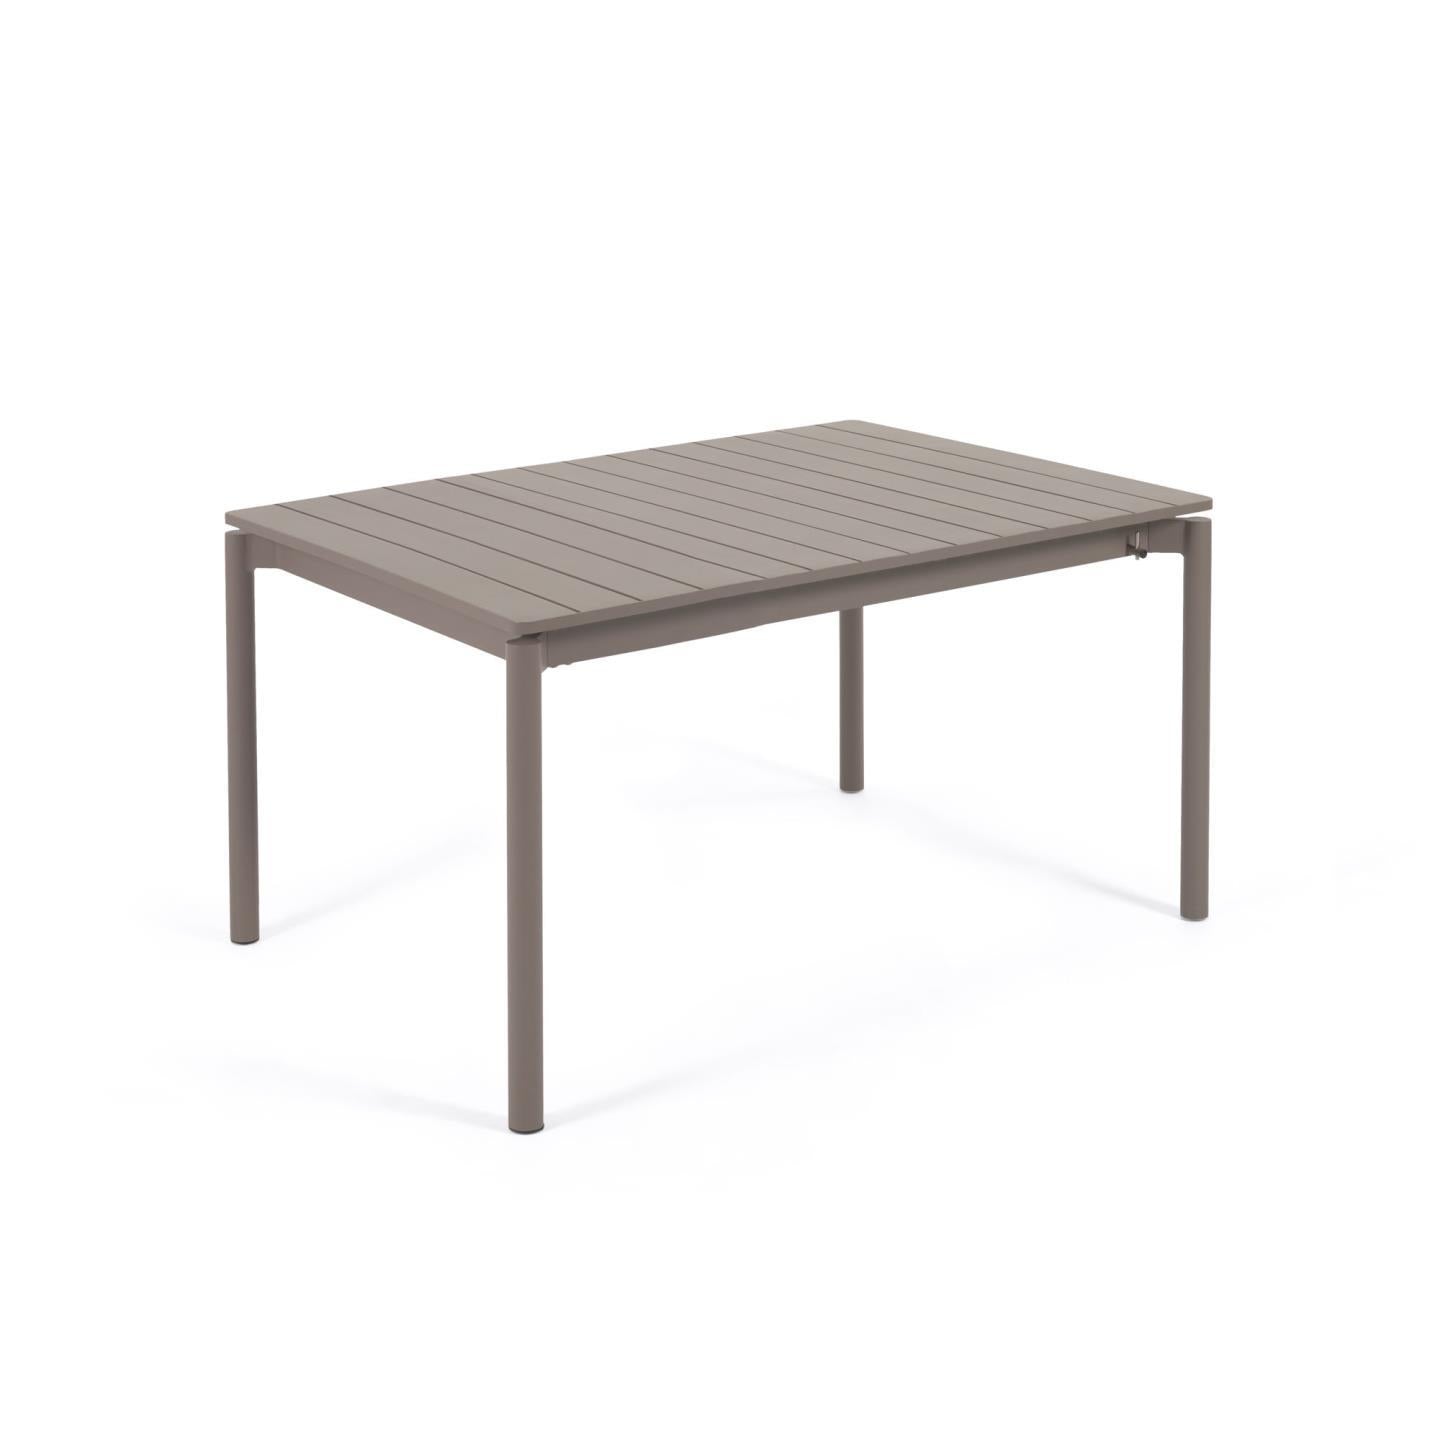 Zaltana extendable aluminium outdoor table with matt brown finish 140 (200) x 90 cm